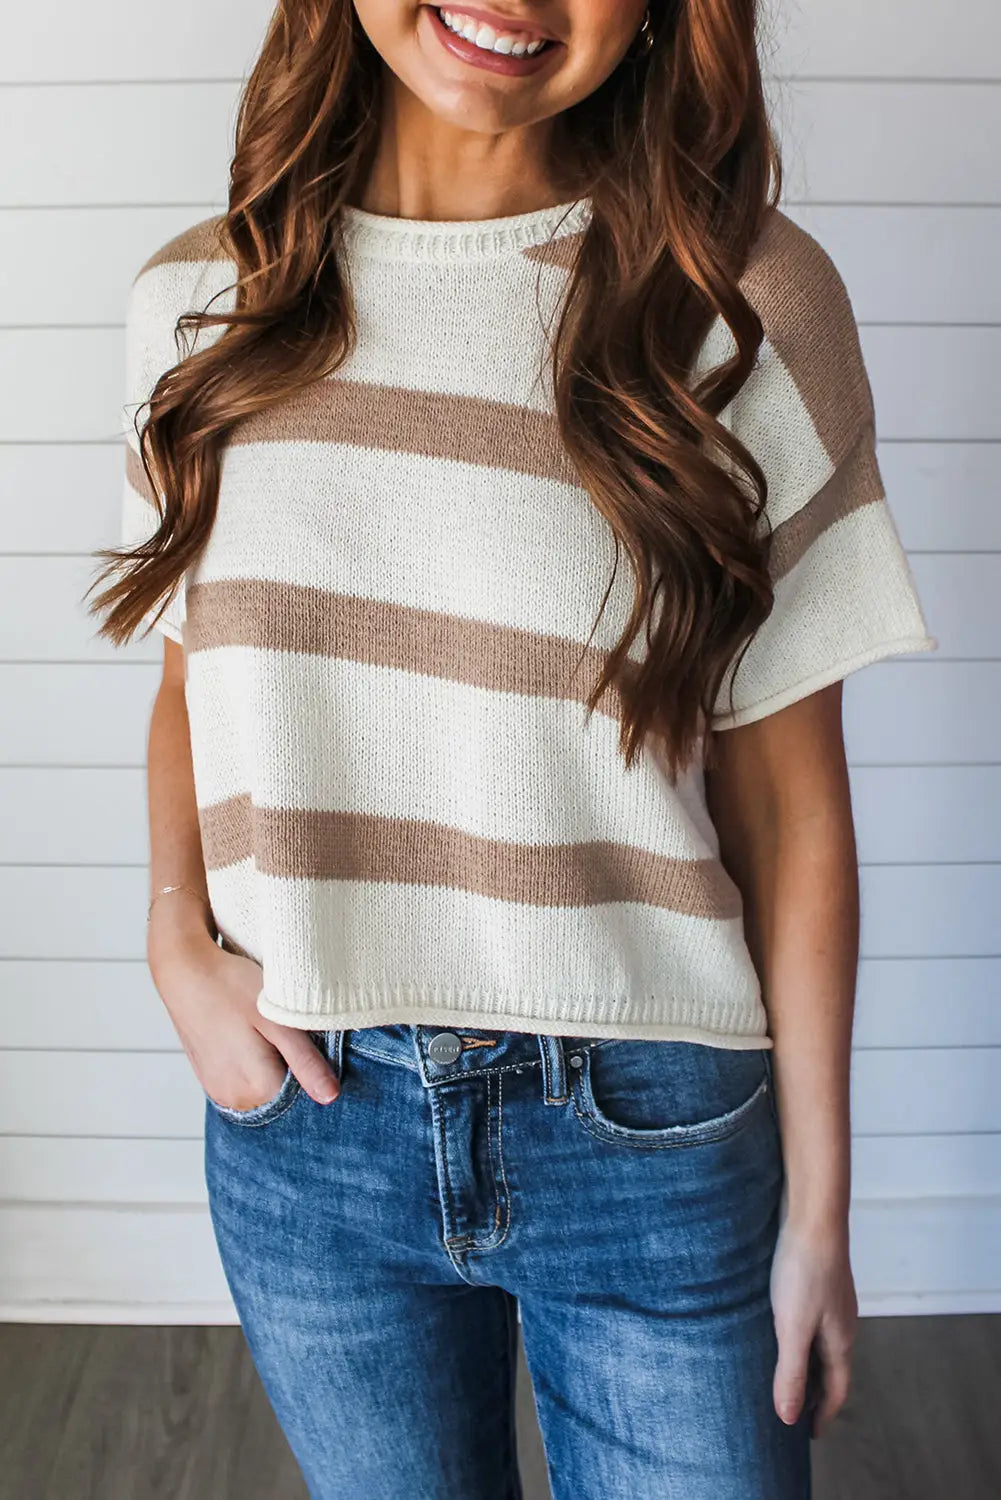 Lightweight knit top - khaki stripe dropped short sleeve - s / 50% viscose + 28% polyester + 22% polyamide - sweaters